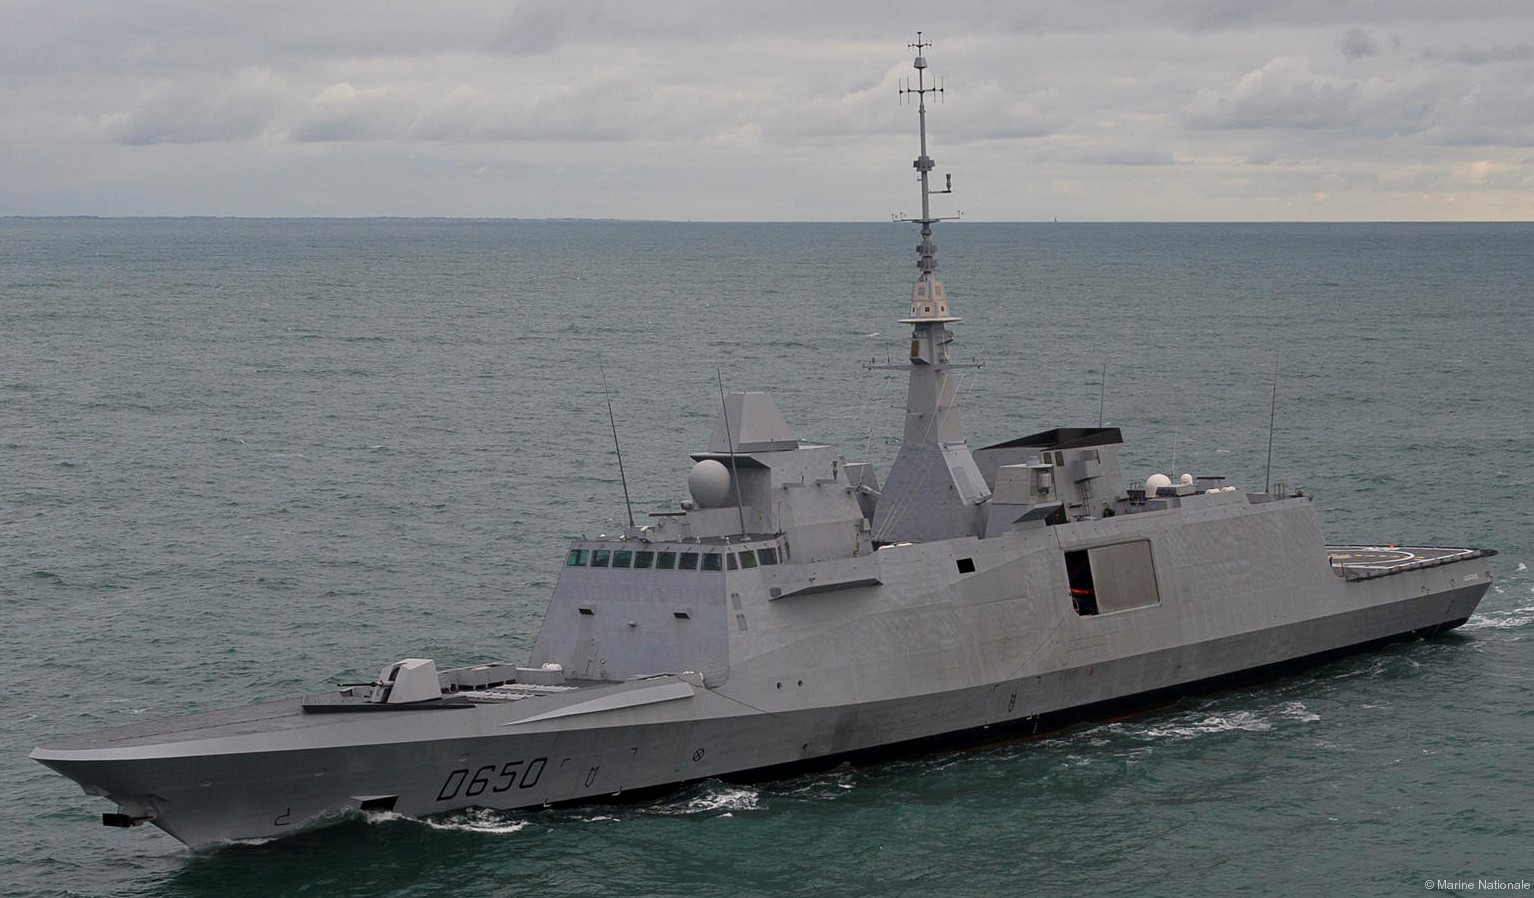 d-650 fs aquitaine fremm class frigate fregate multi purpose french navy marine nationale 05